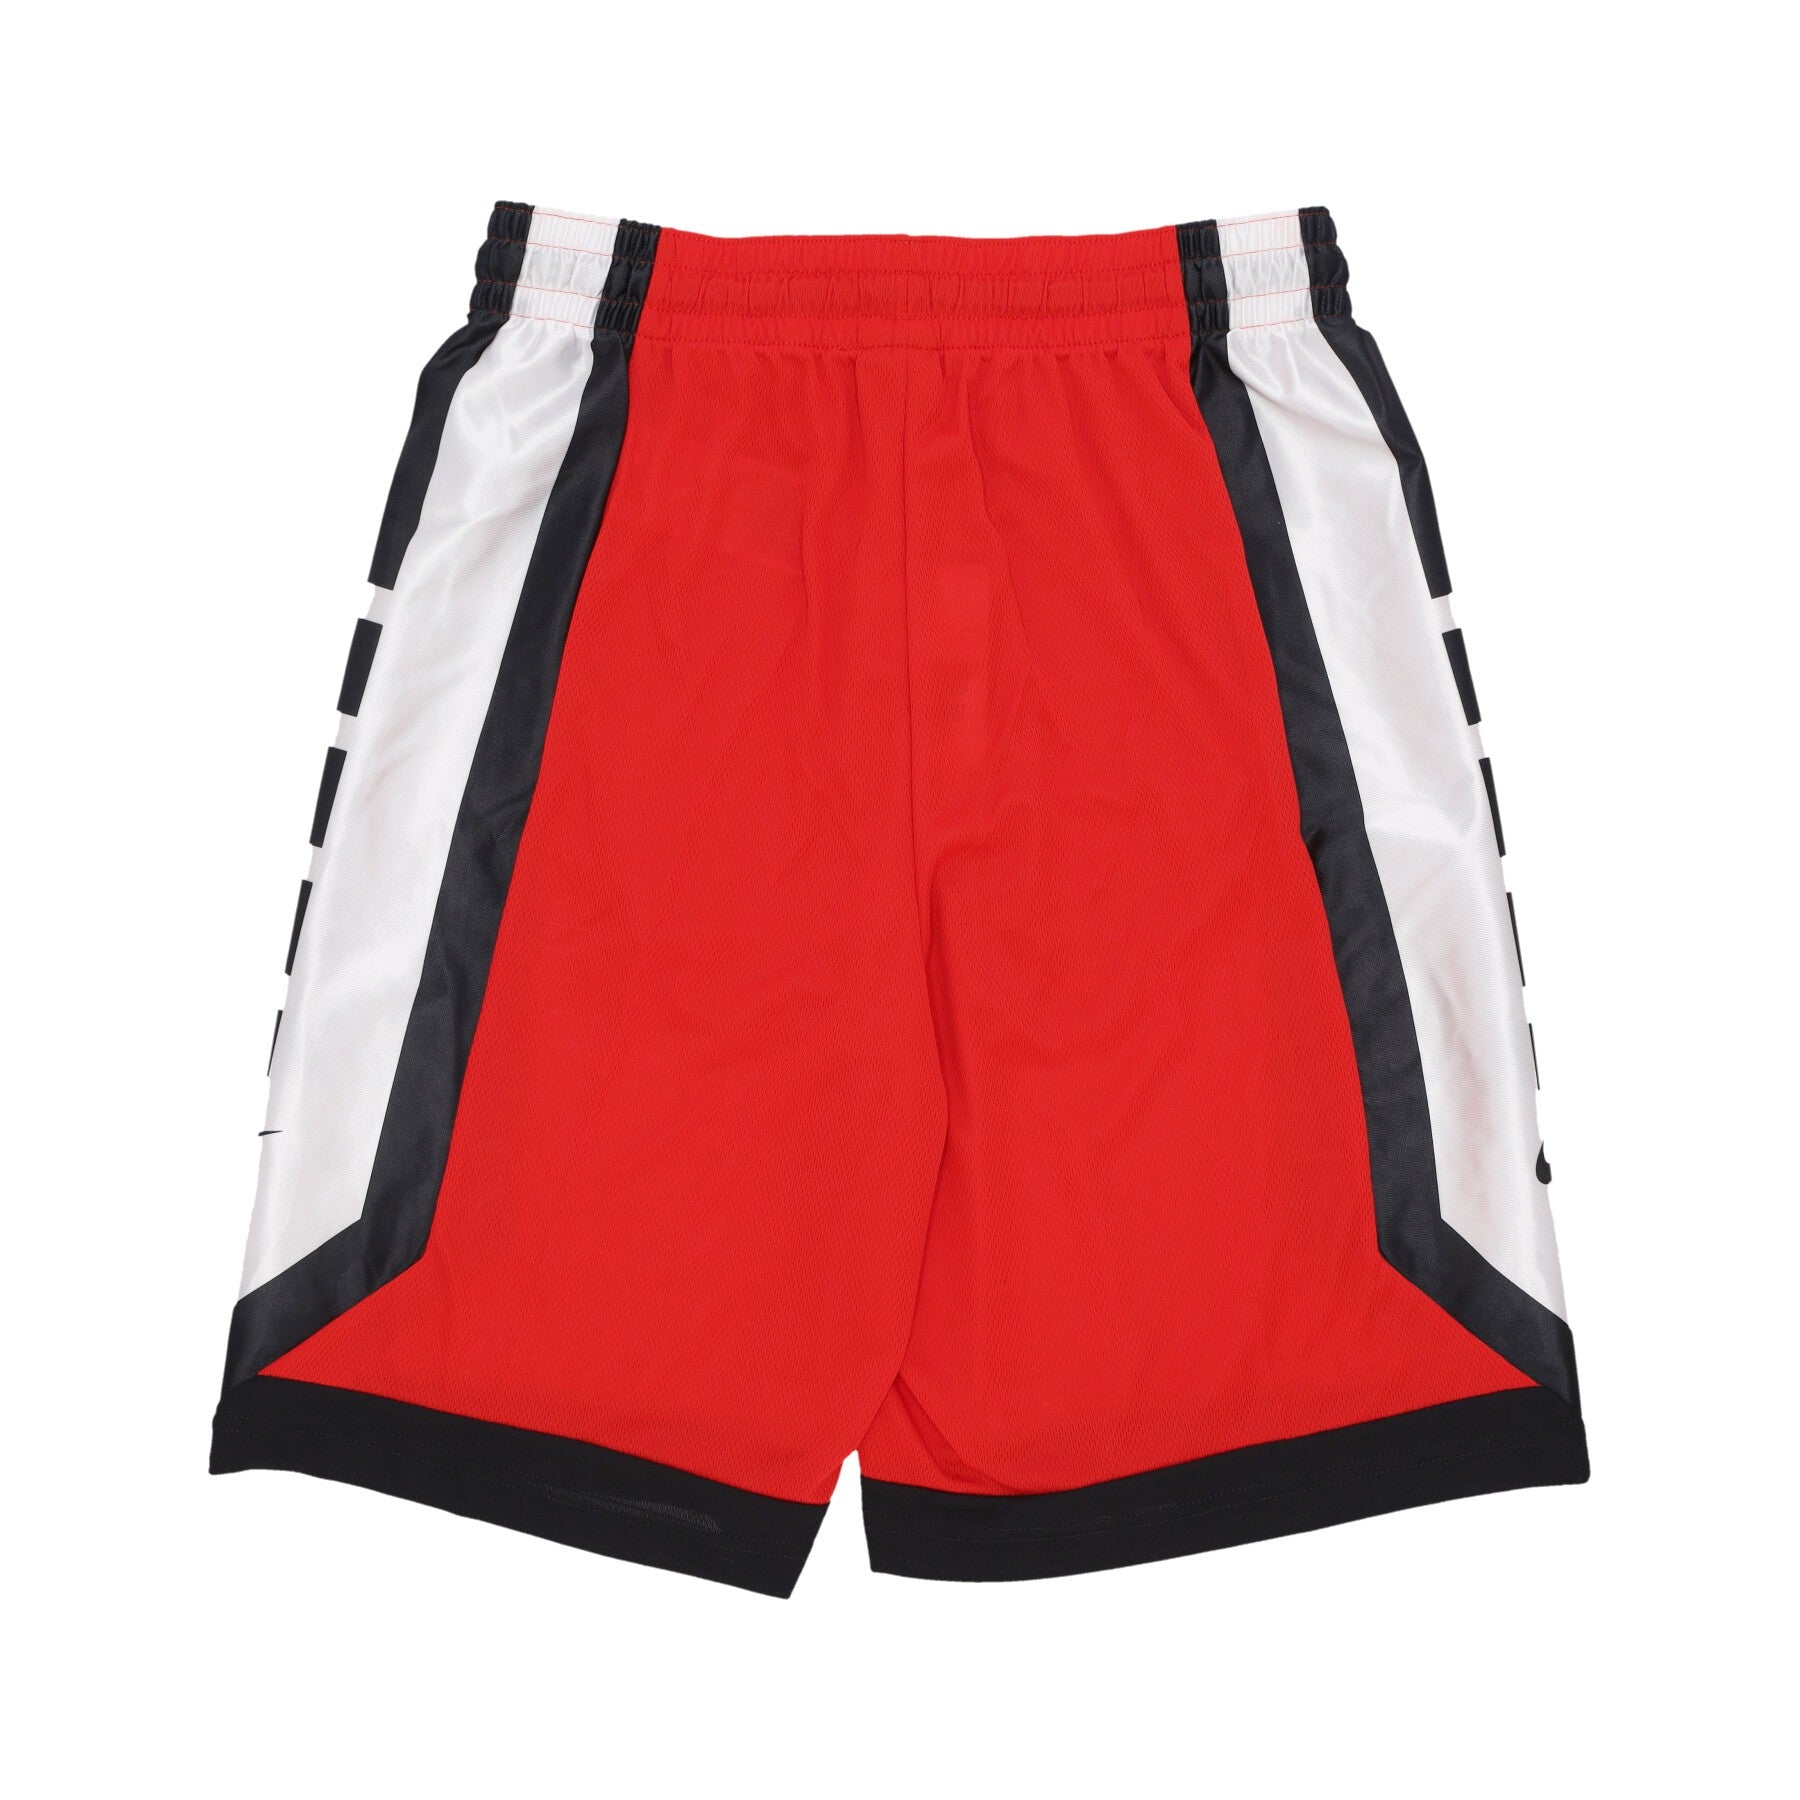 Men's Basketball Shorts Dri-fit Elite Basketball Shorts University Red/black/black